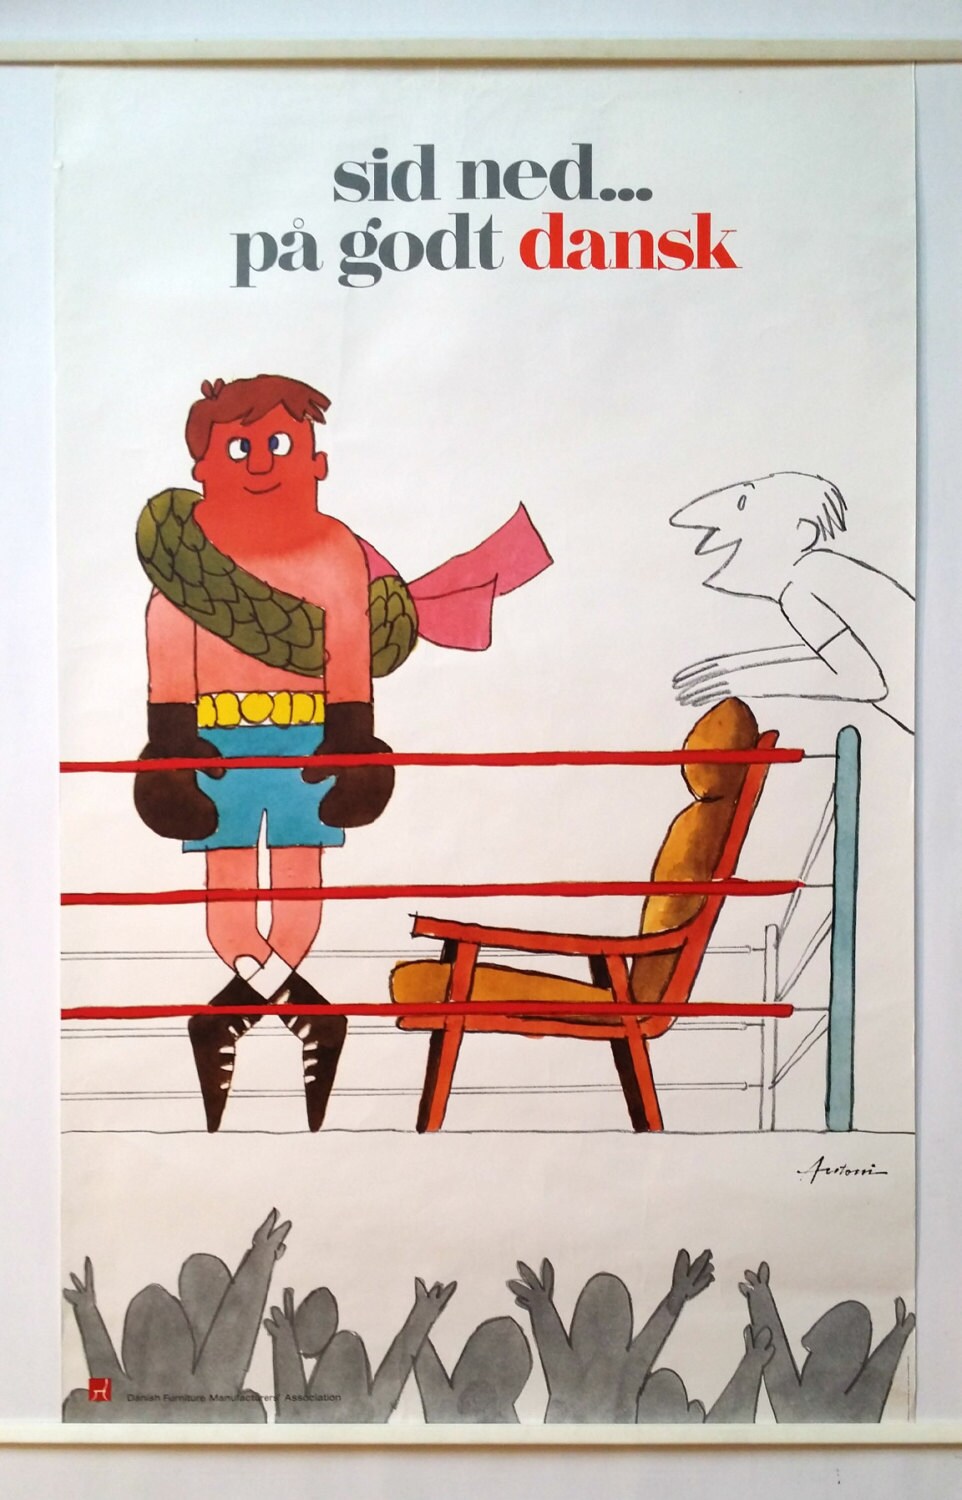 1970s Danish Furniture Quality Control by Antoni (Boxer) - Original Vintage Poster